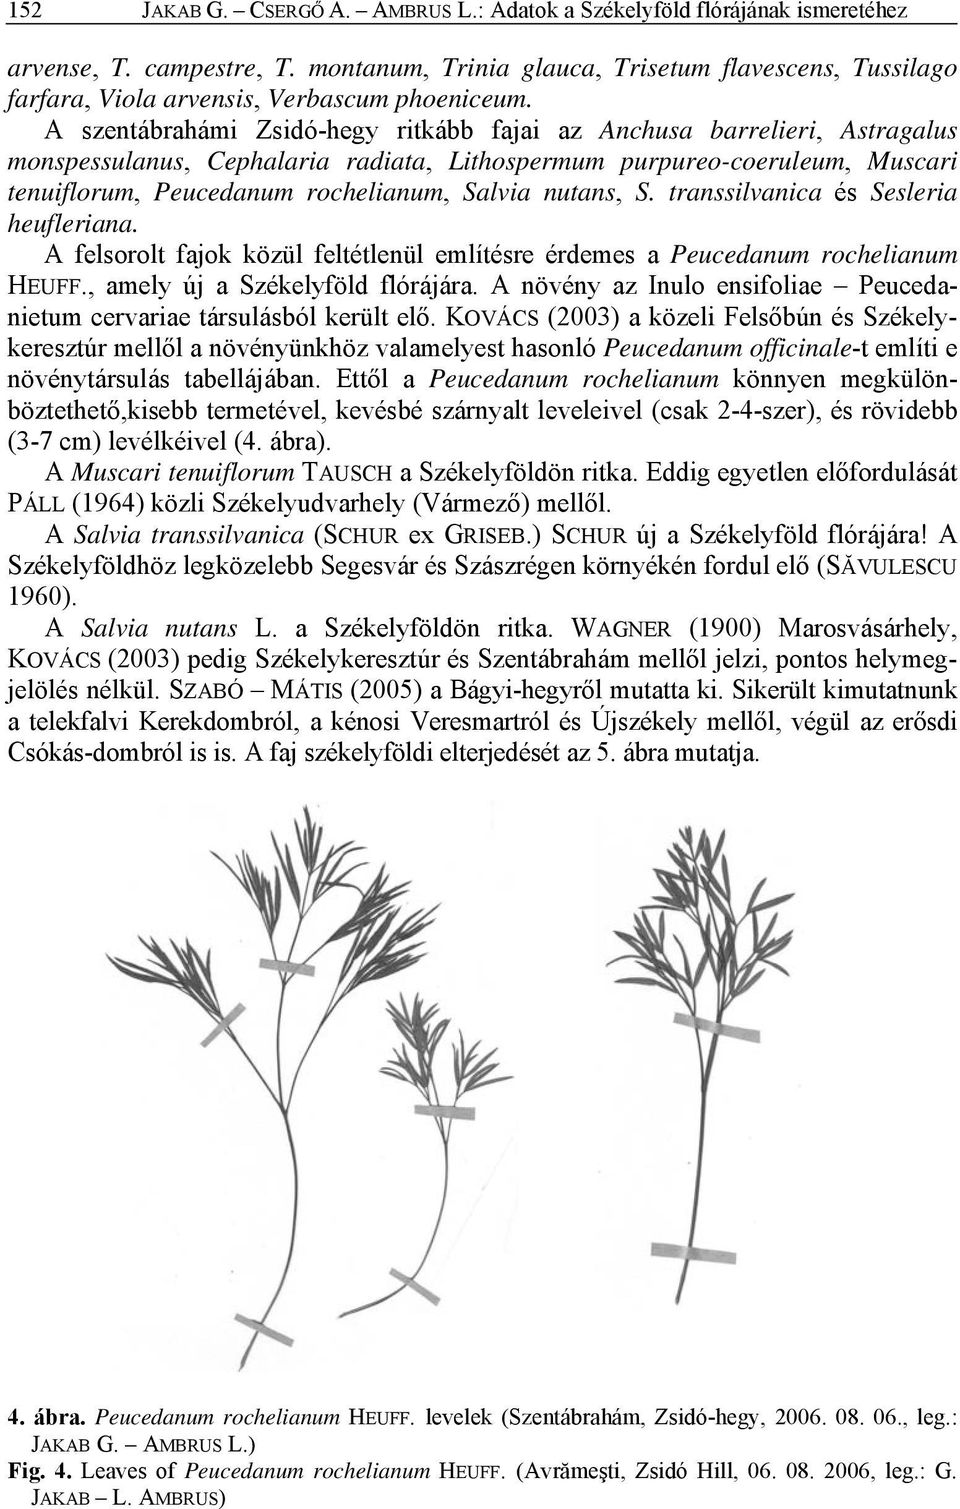 A szentábrahámi Zsidó-hegy ritkább fajai az Anchusa barrelieri, Astragalus monspessulanus, Cephalaria radiata, Lithospermum purpureo-coeruleum, Muscari tenuiflorum, Peucedanum rochelianum, Salvia